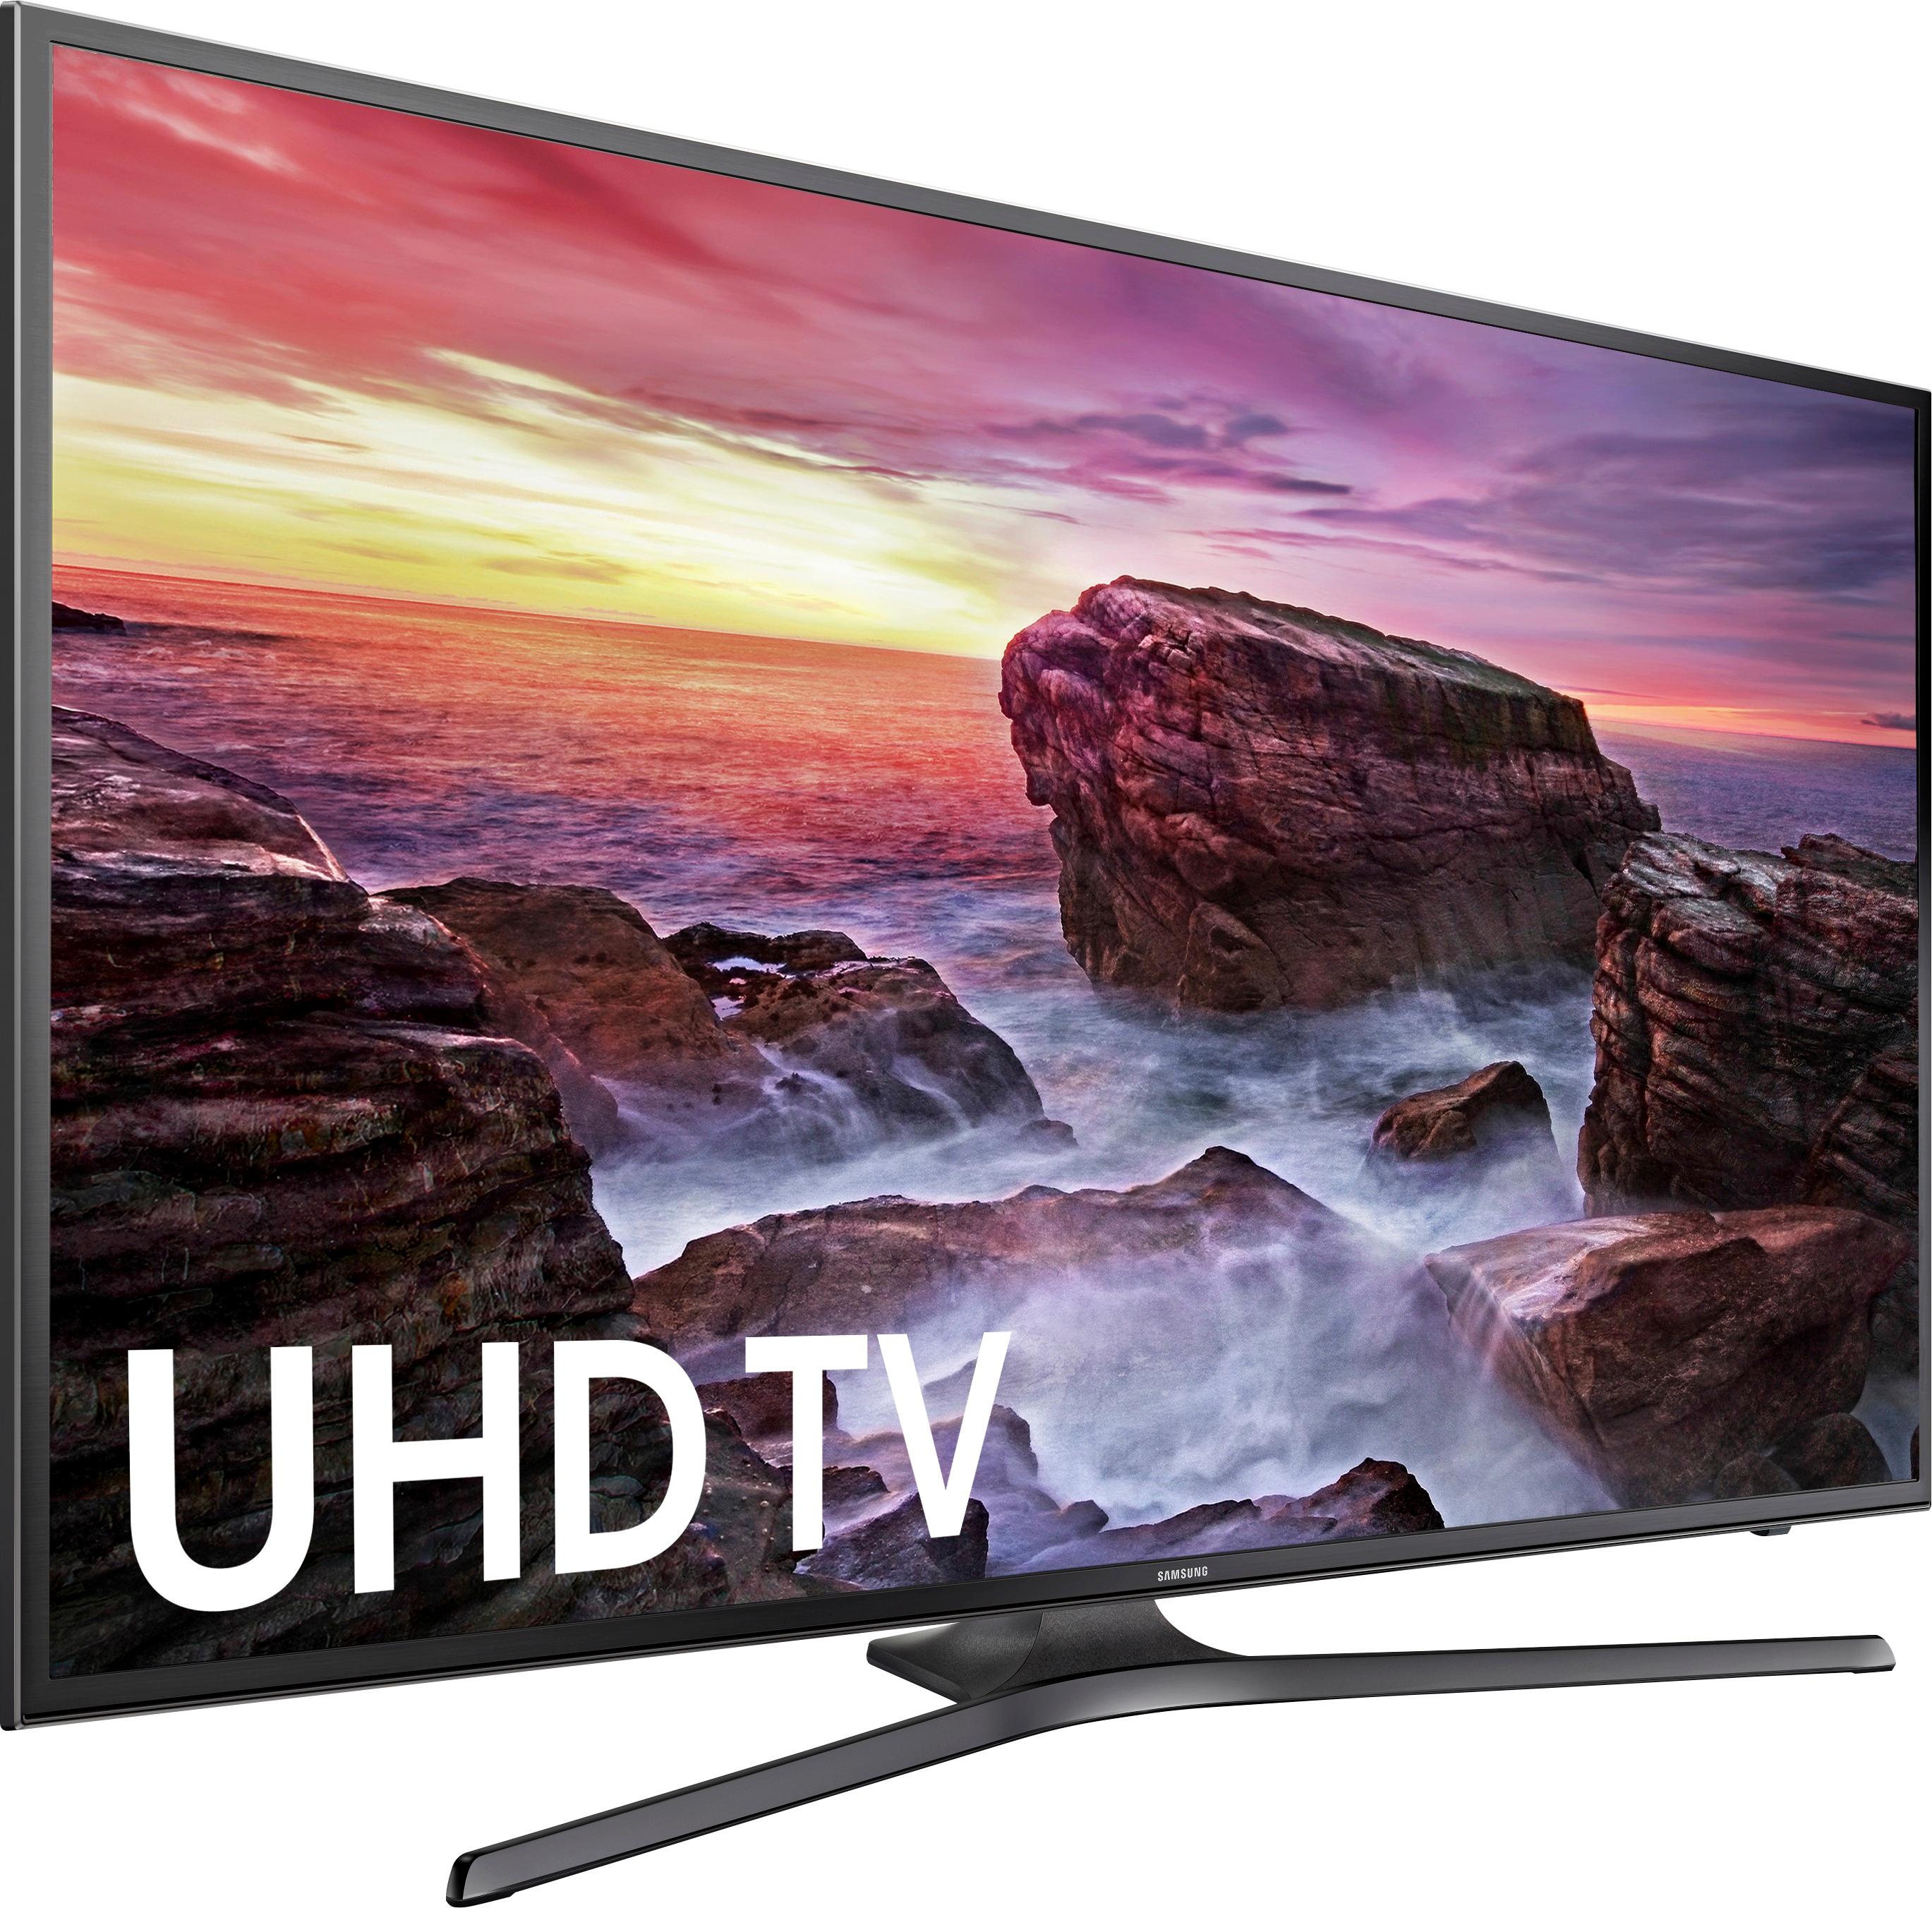 Best Buy: Samsung 55" Class LED MU6290 Series 2160p Smart Ultra HD TV with UN55MU6290FXZA